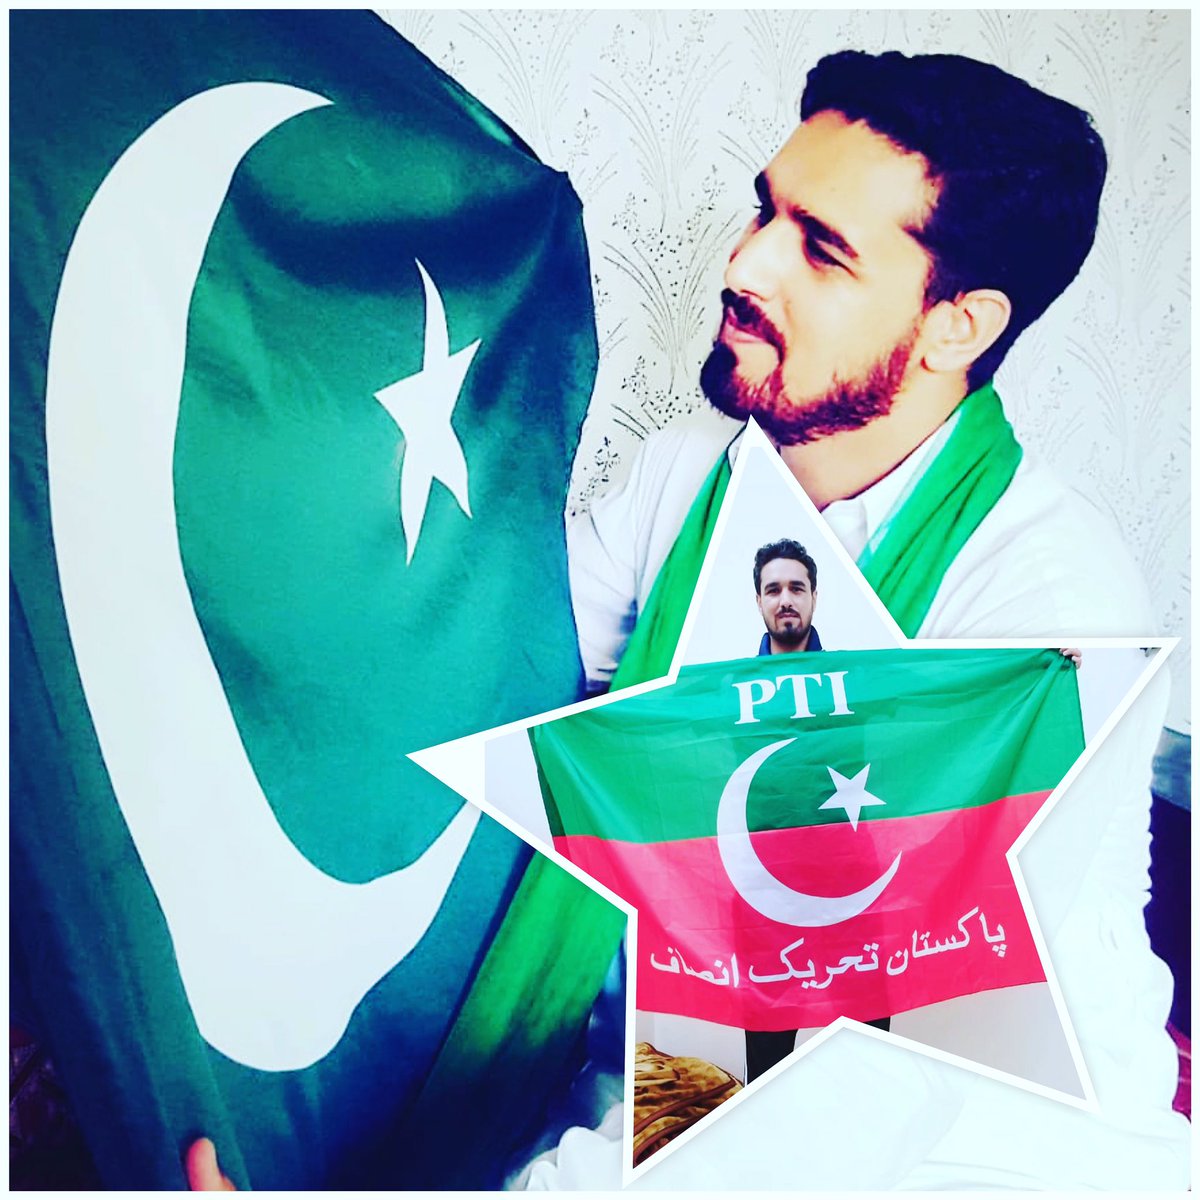 Quote with PTI flag ✌🏼
#BehindYouSkipperAlways 
#اب_صرف_عمران_خان 
#PakistanZindabad